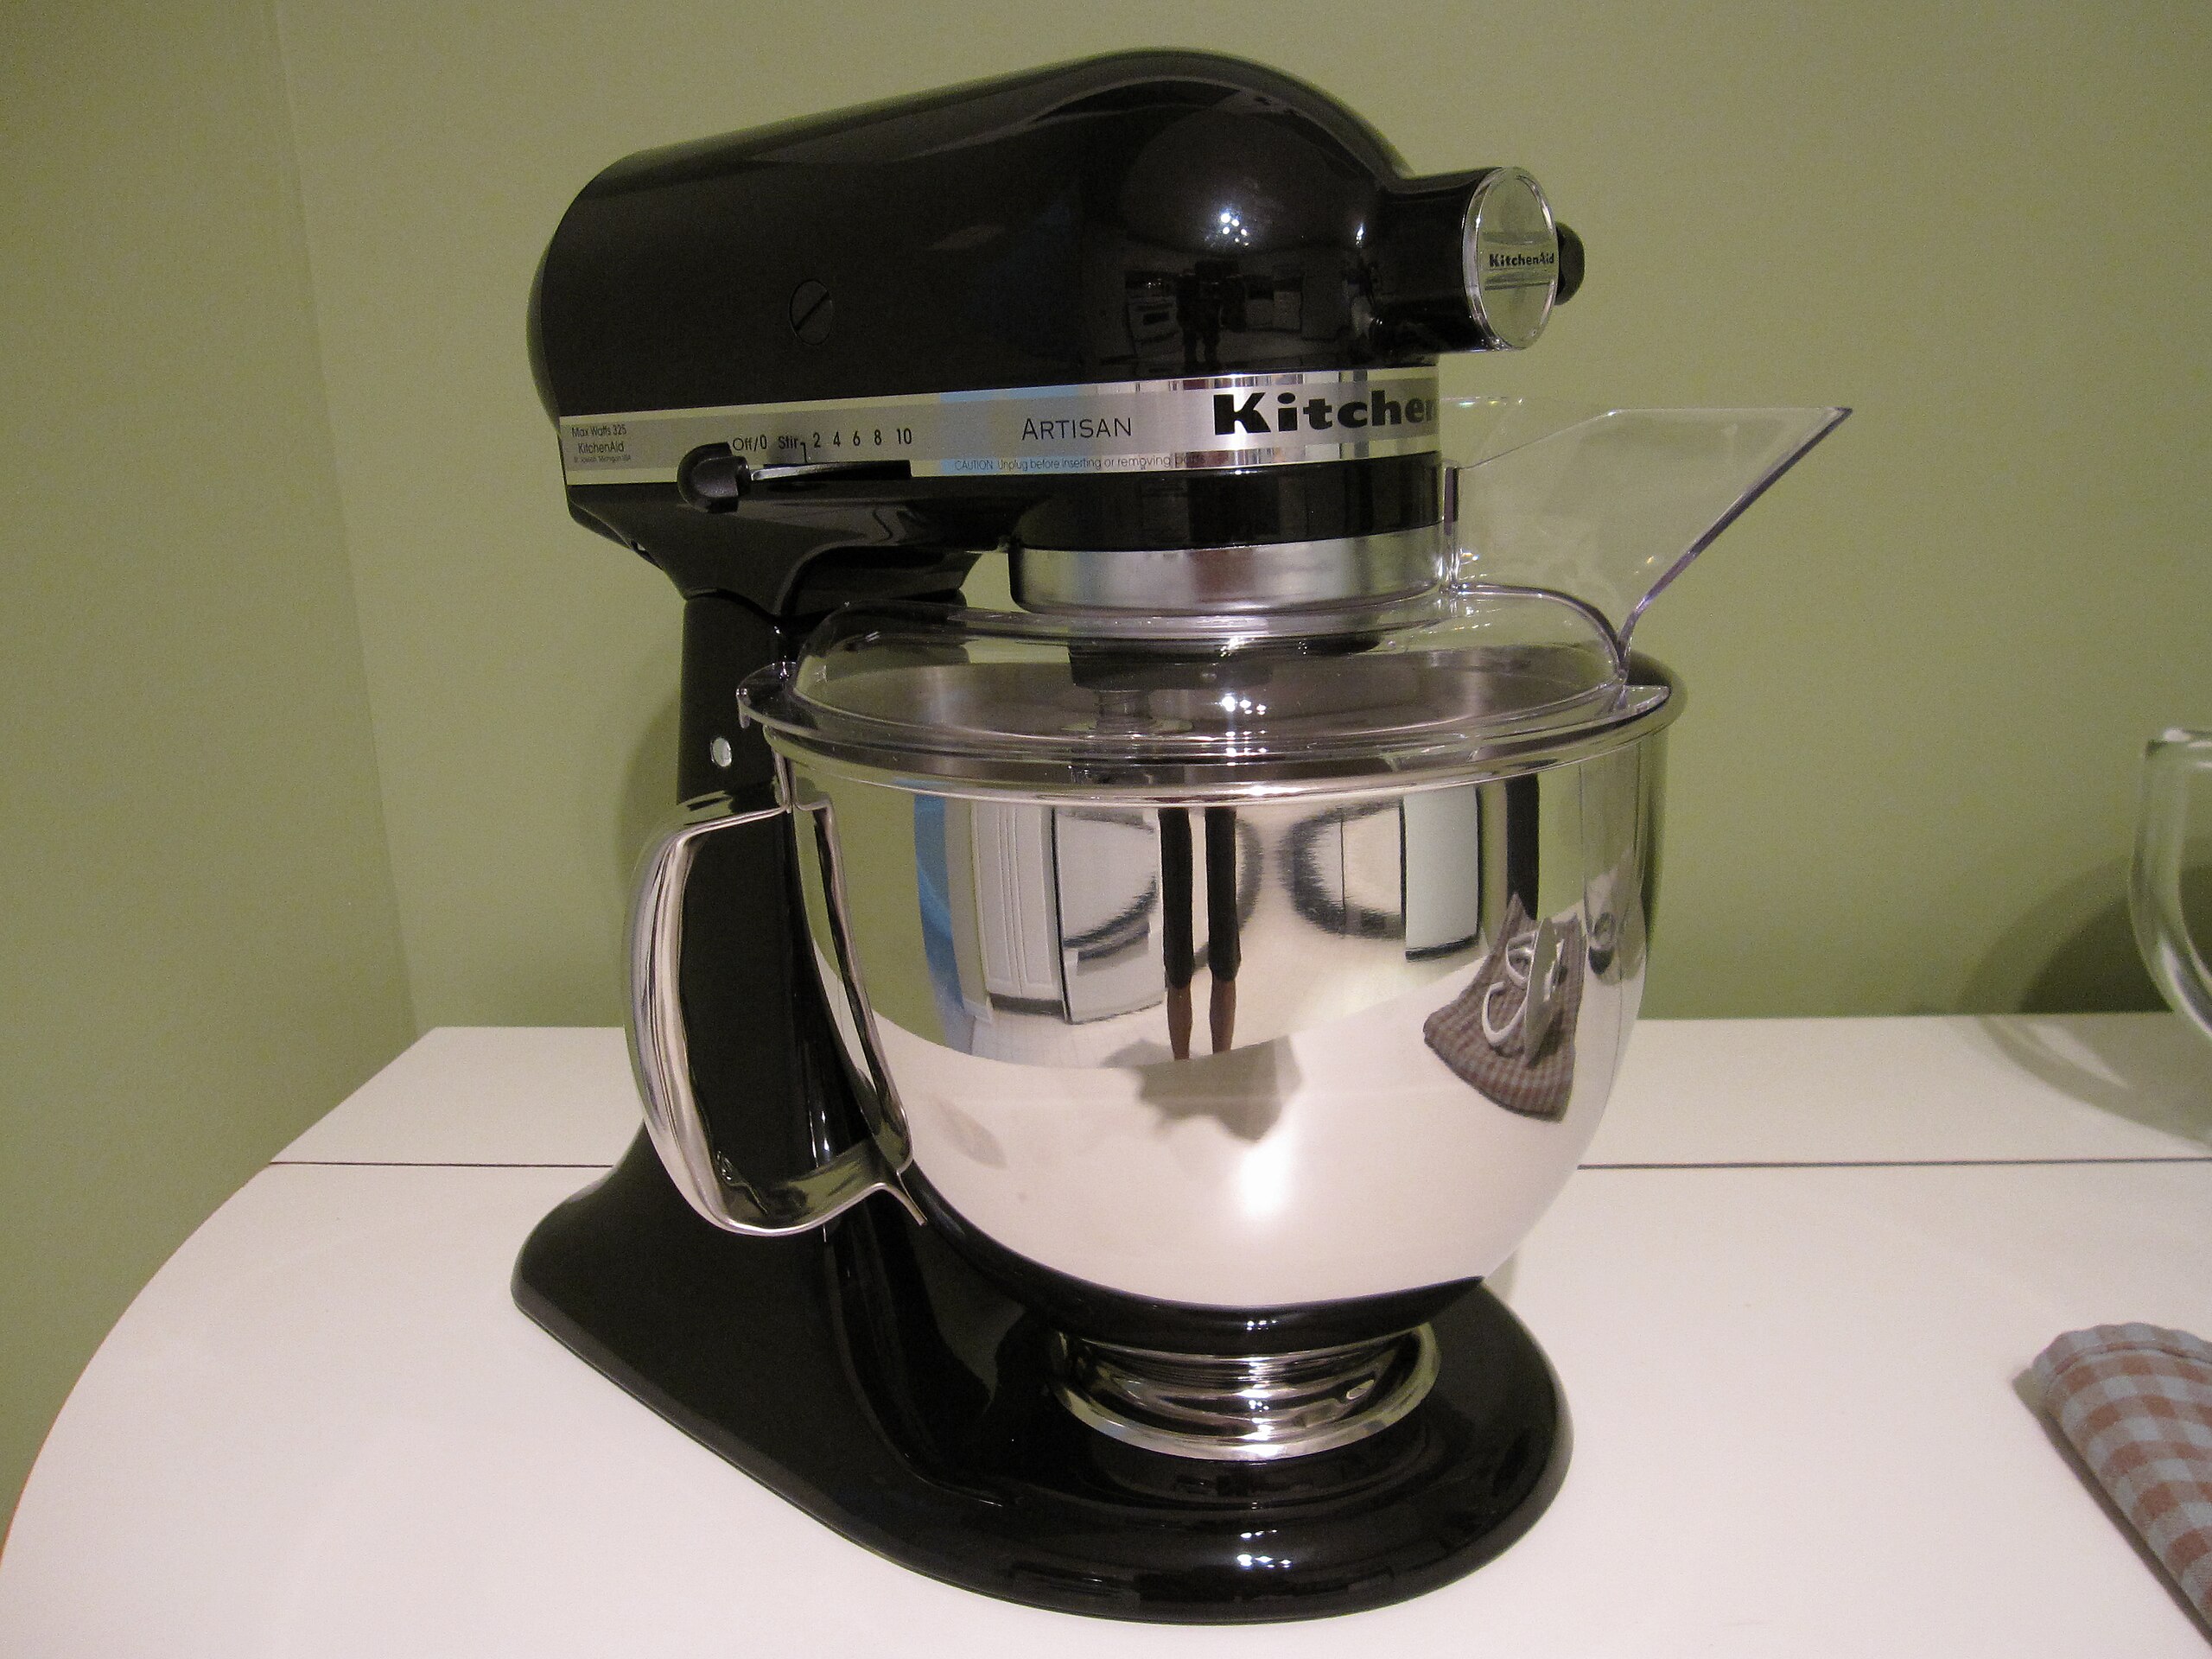 File:Purple KitchenAid Mixer in motion.jpg - Wikimedia Commons